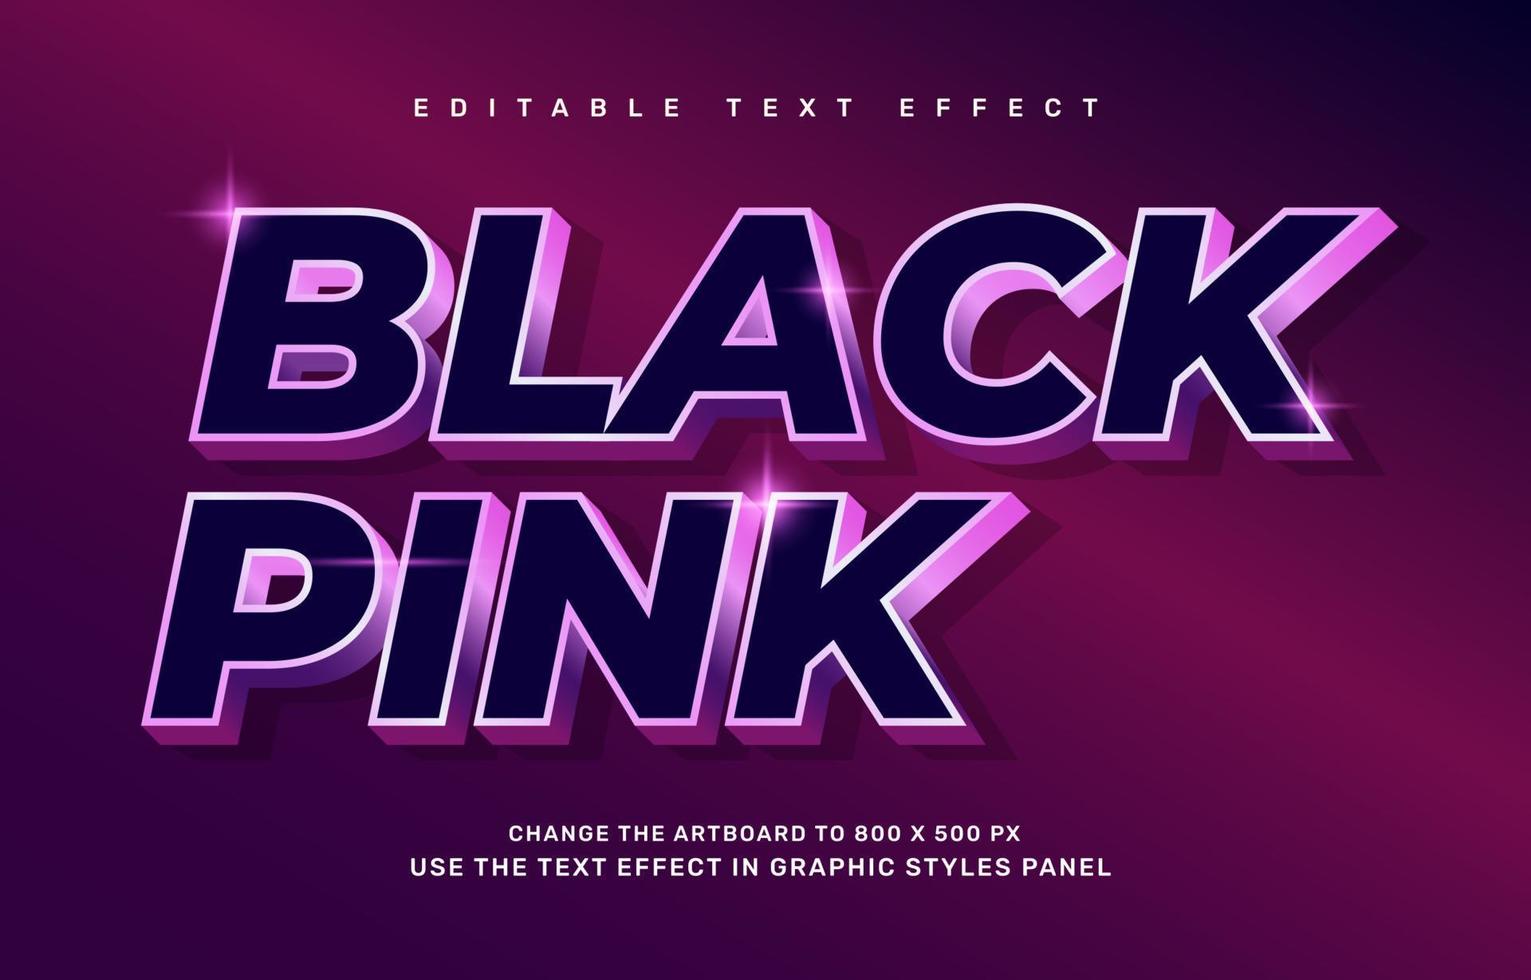 Blackpink text effect vector